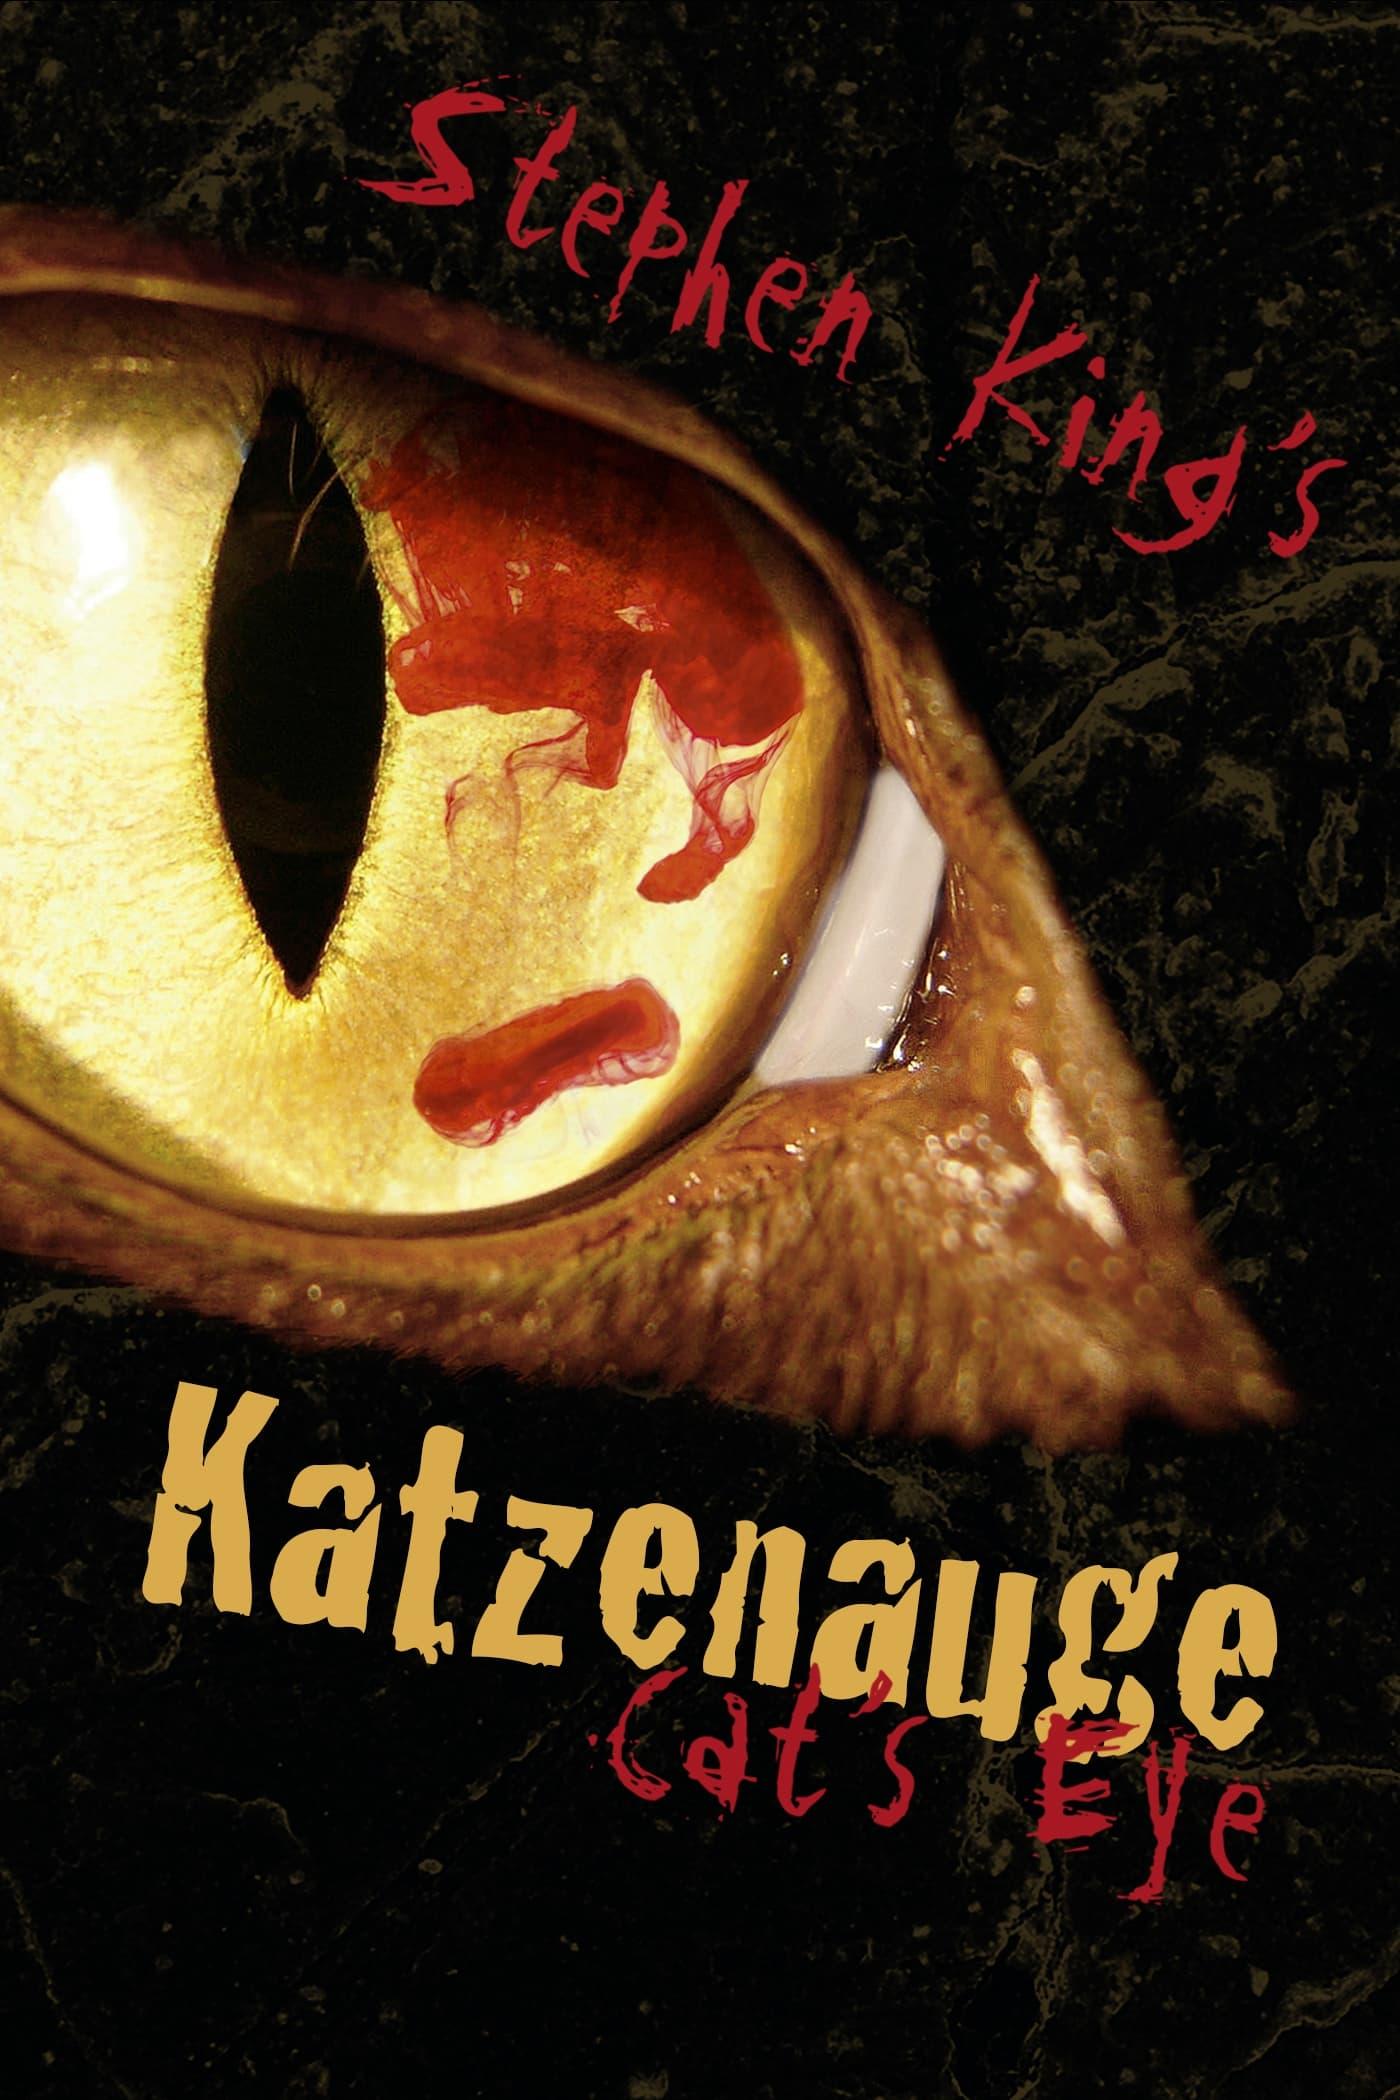 Stephen King's Katzenauge poster